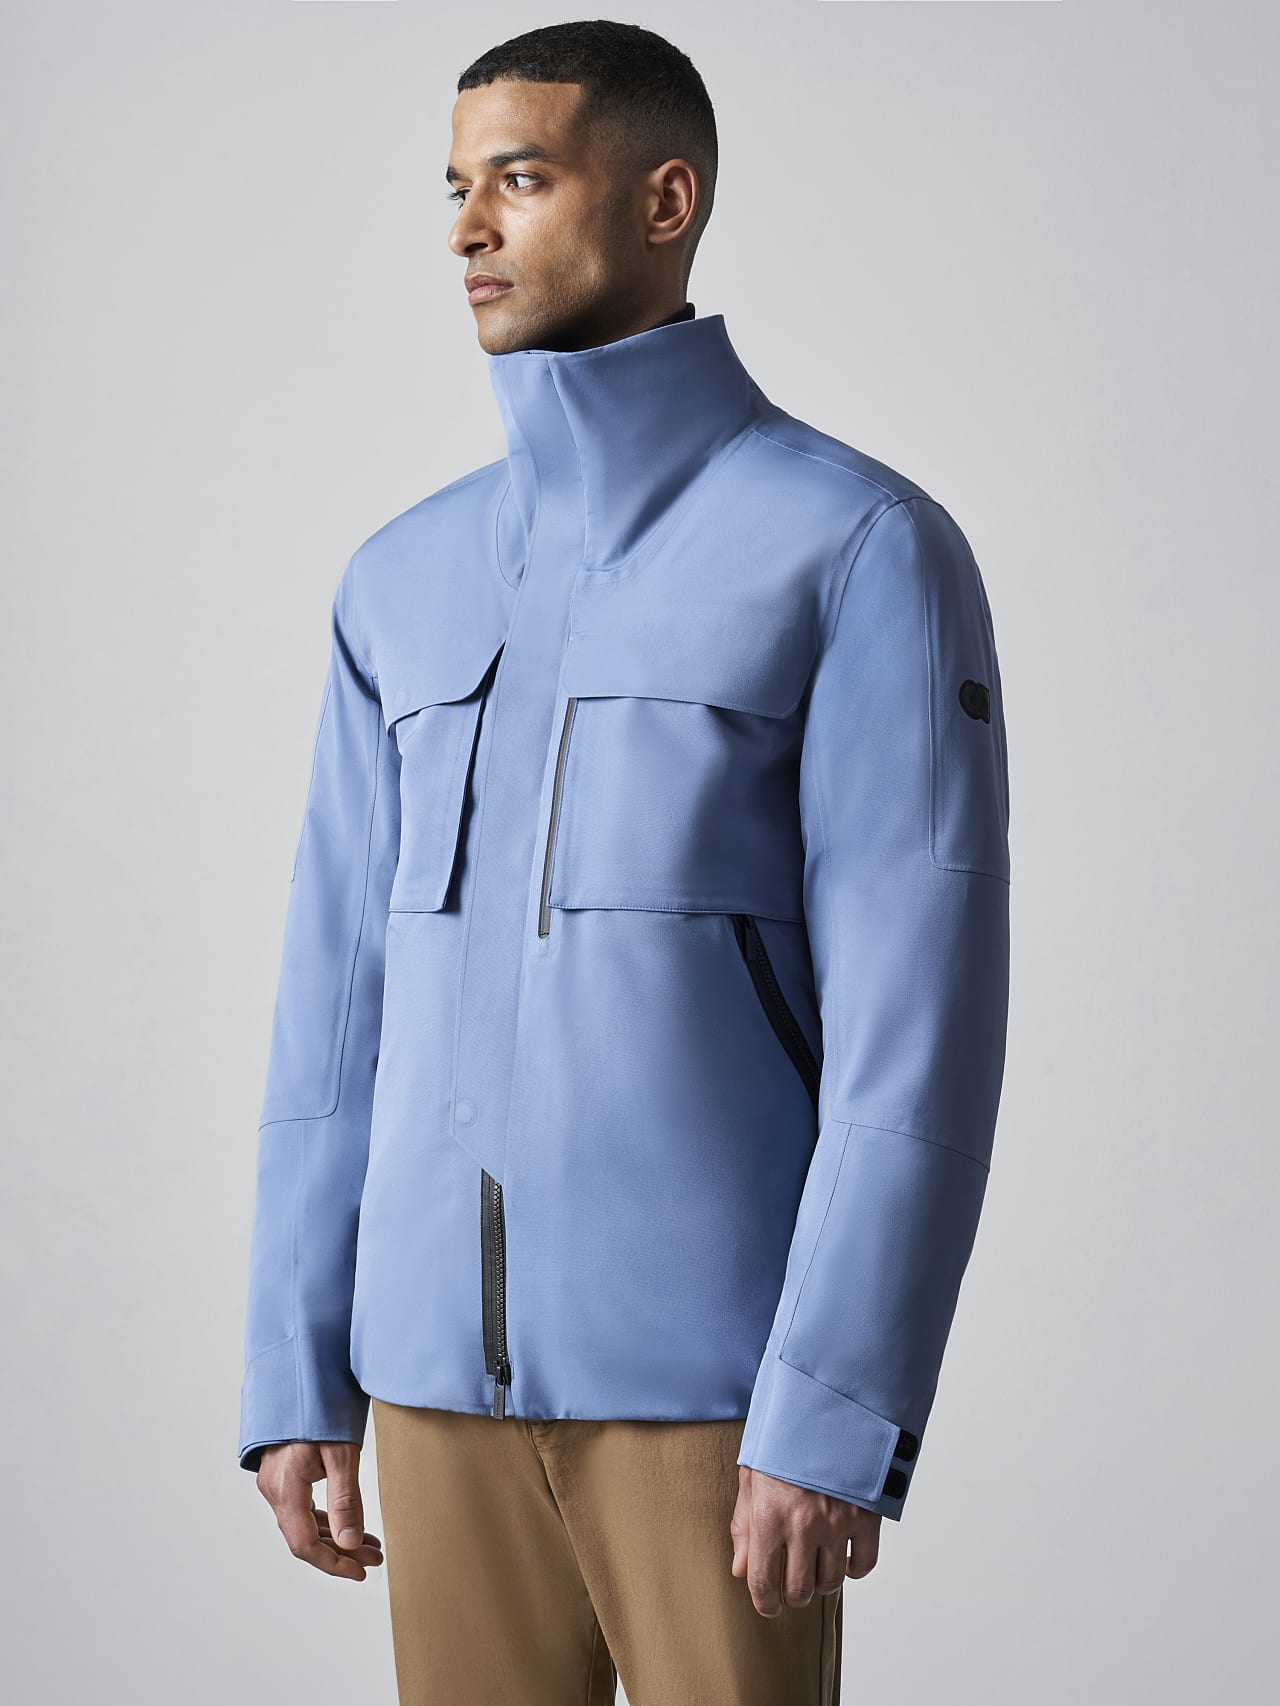 AlphaTauri | OKOVO V4.Y5.02 | Packable and Waterproof Winter Jacket in light blue for Men